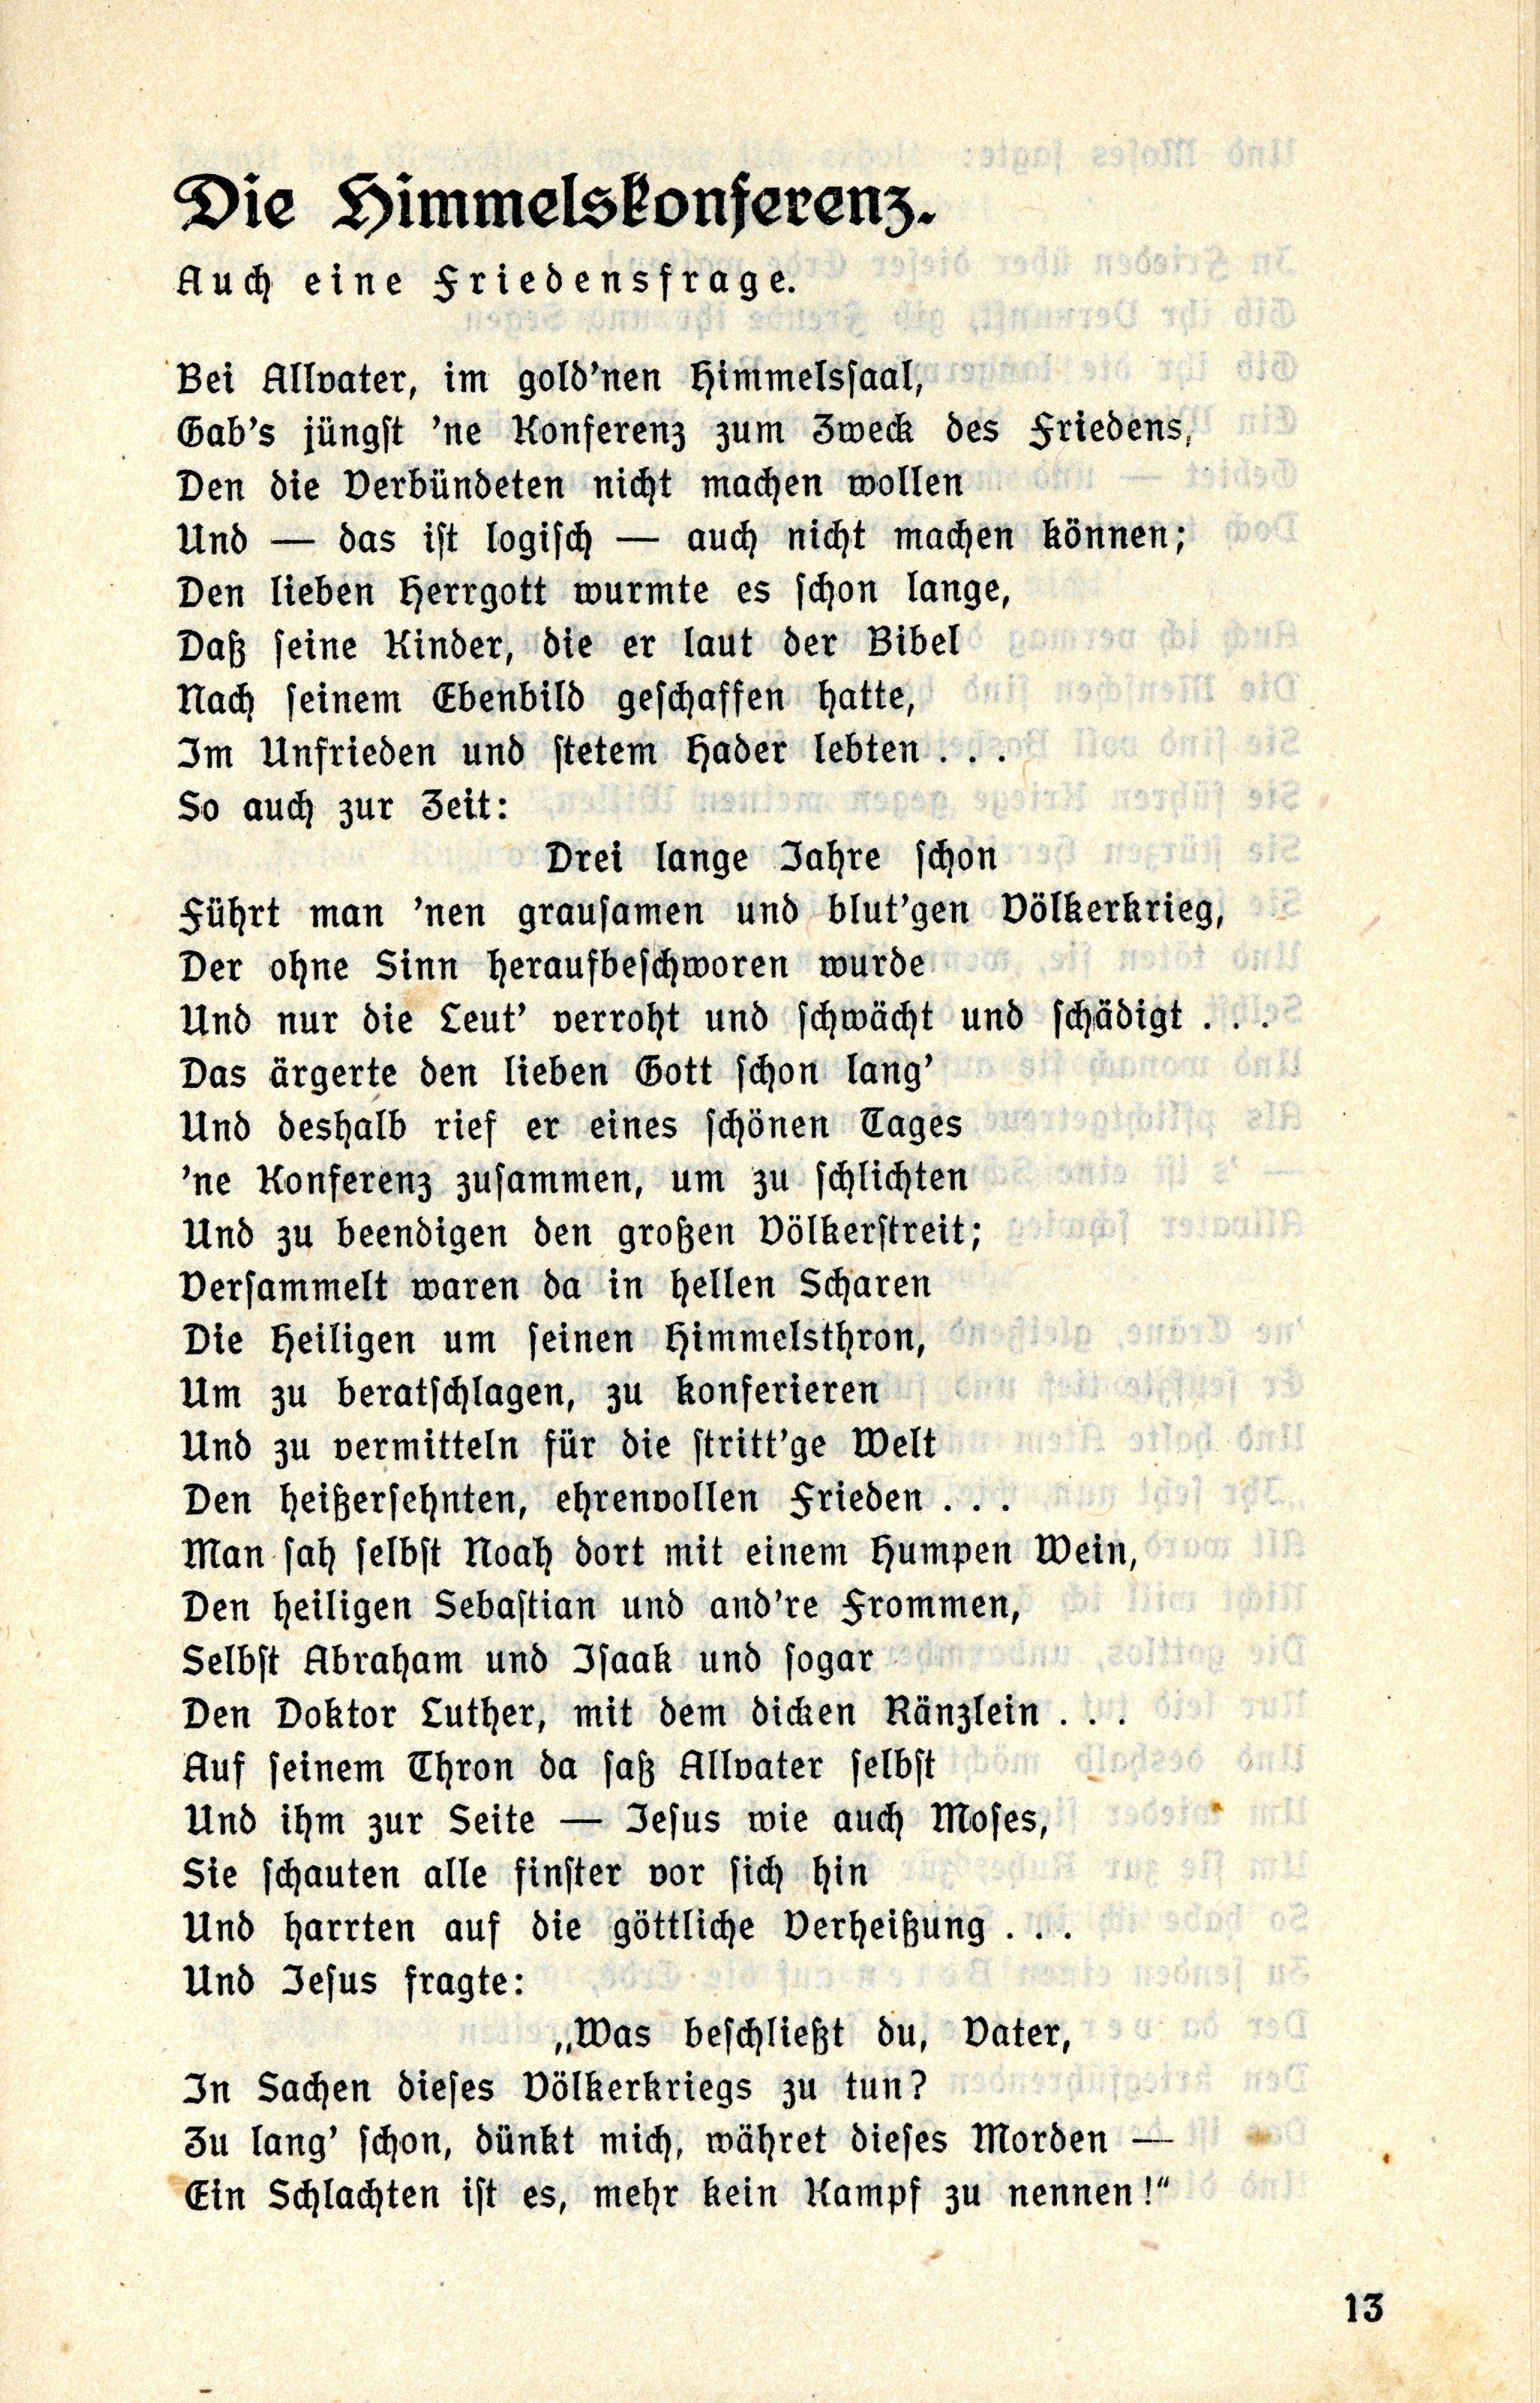 Der Balte im Maulkorb (1917) | 14. (13) Основной текст